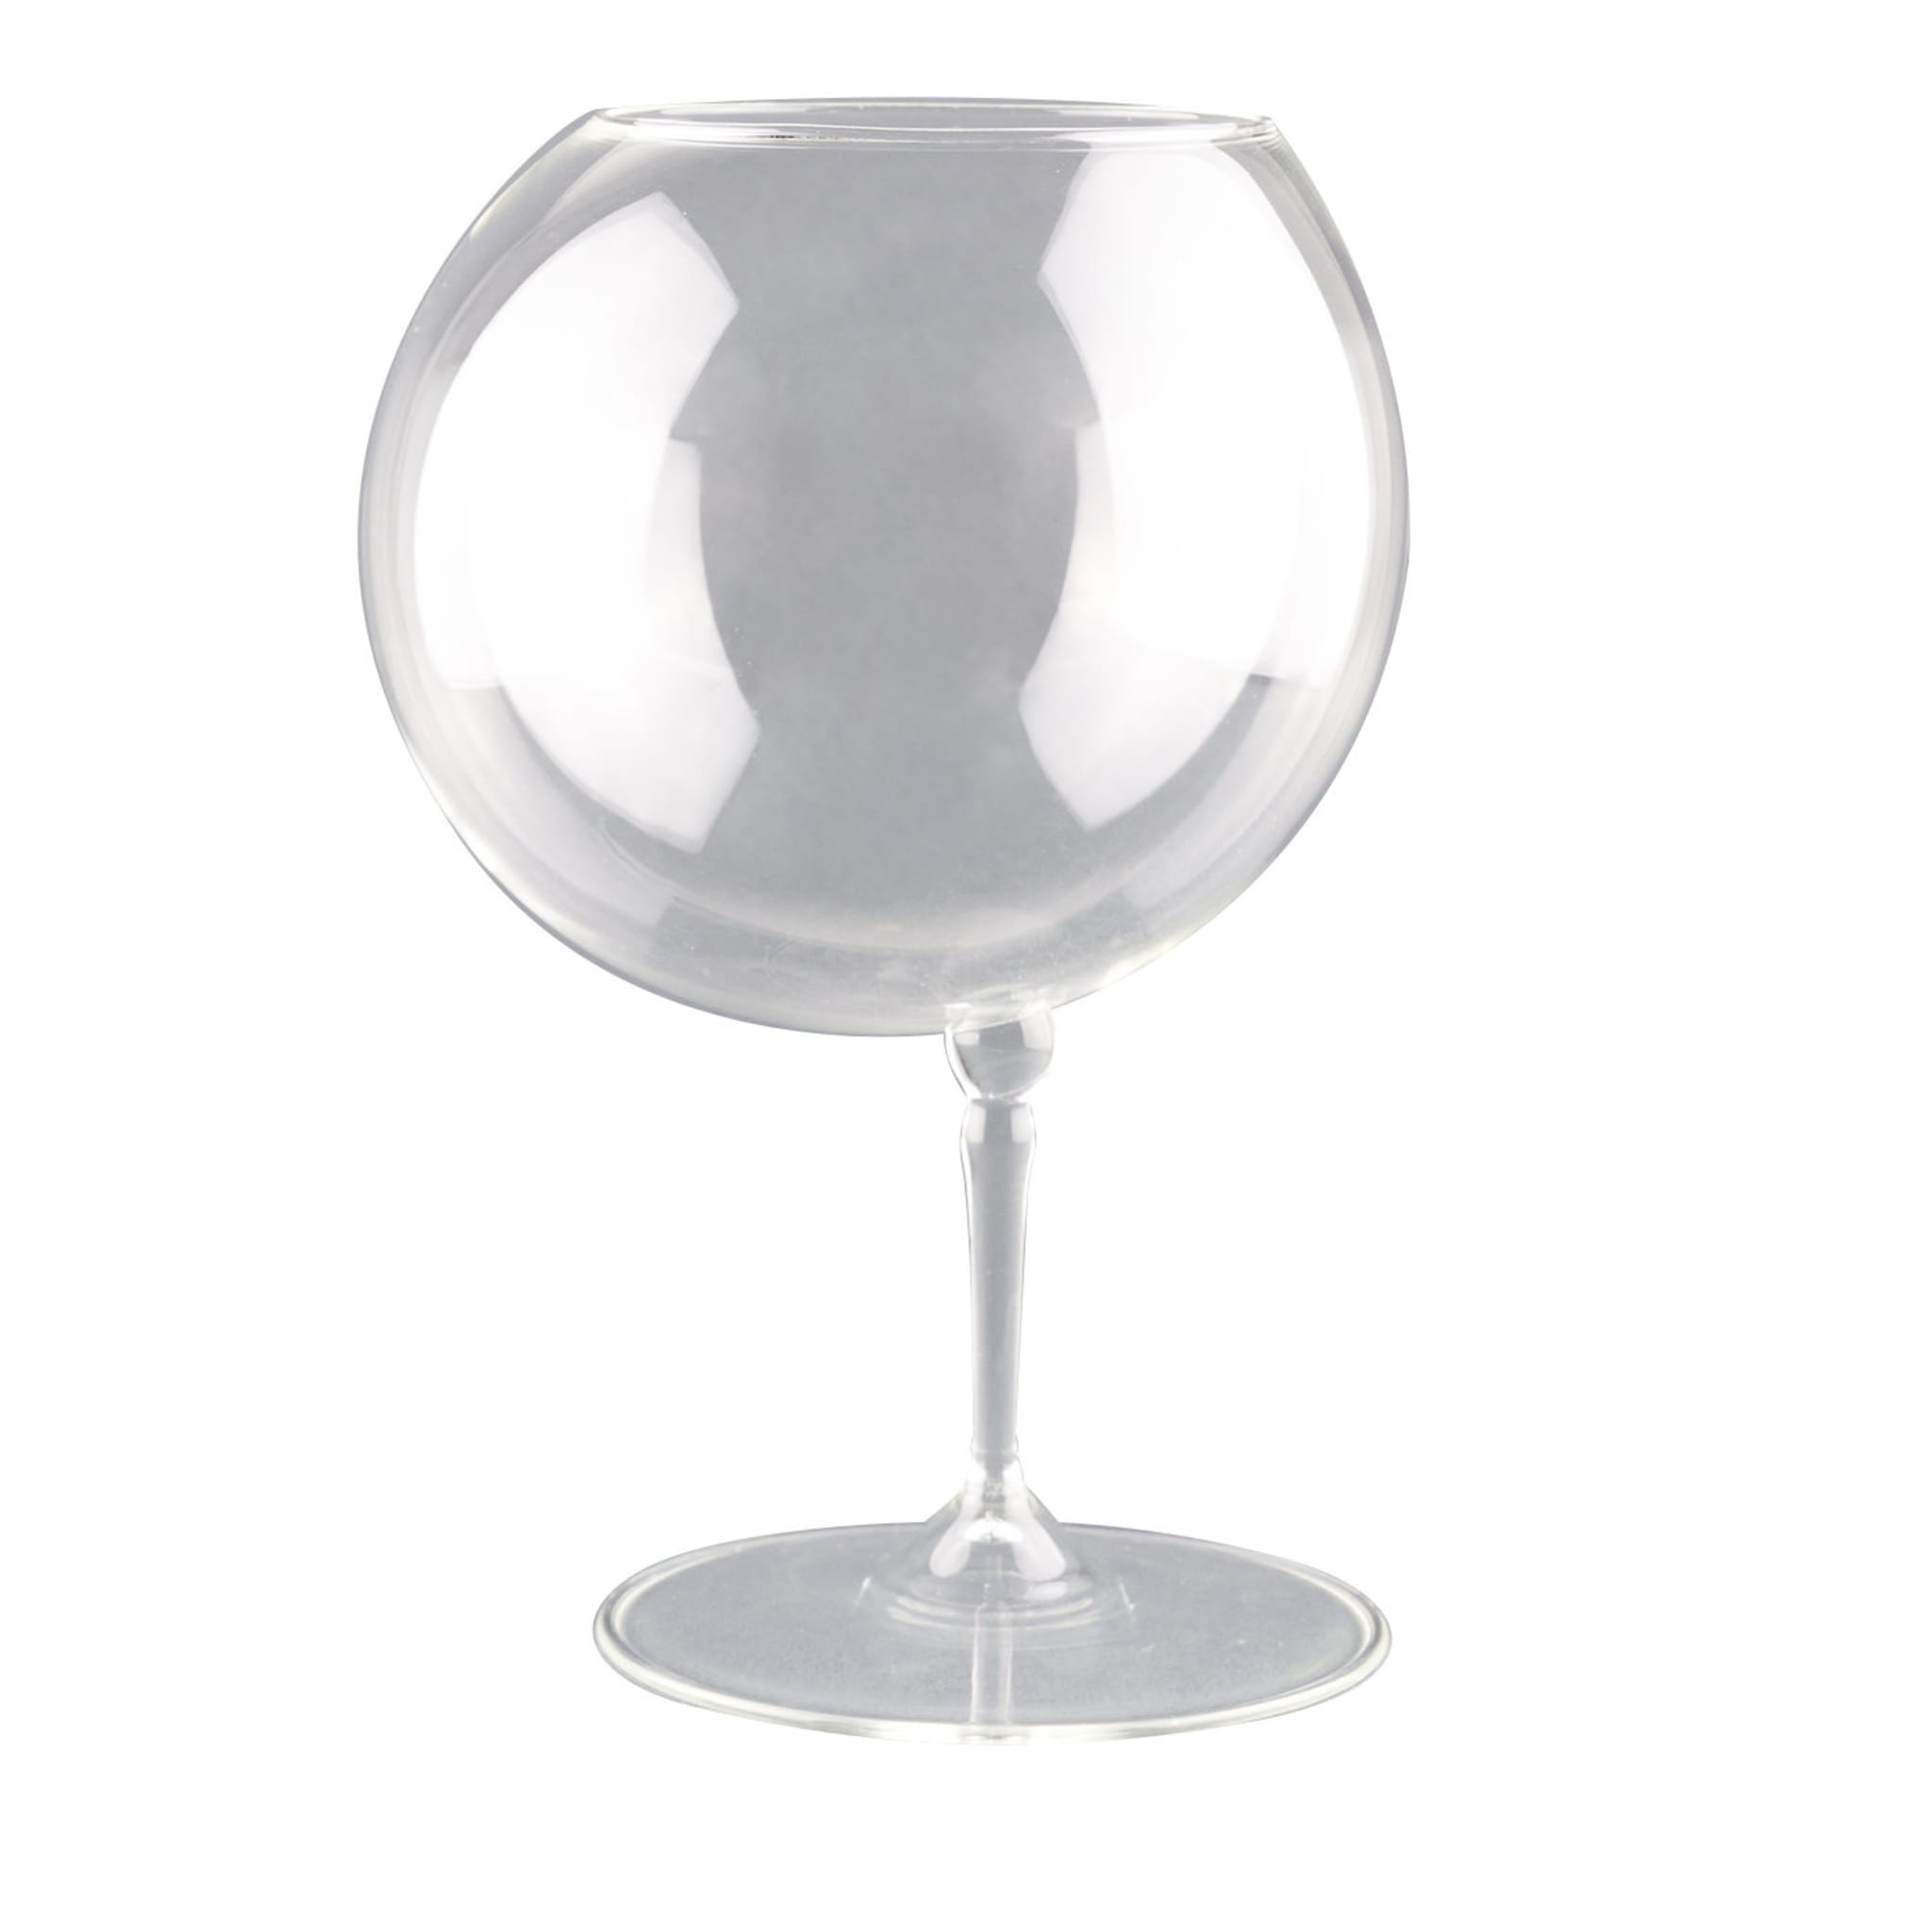 Bubble XL Wine Glass - Main view